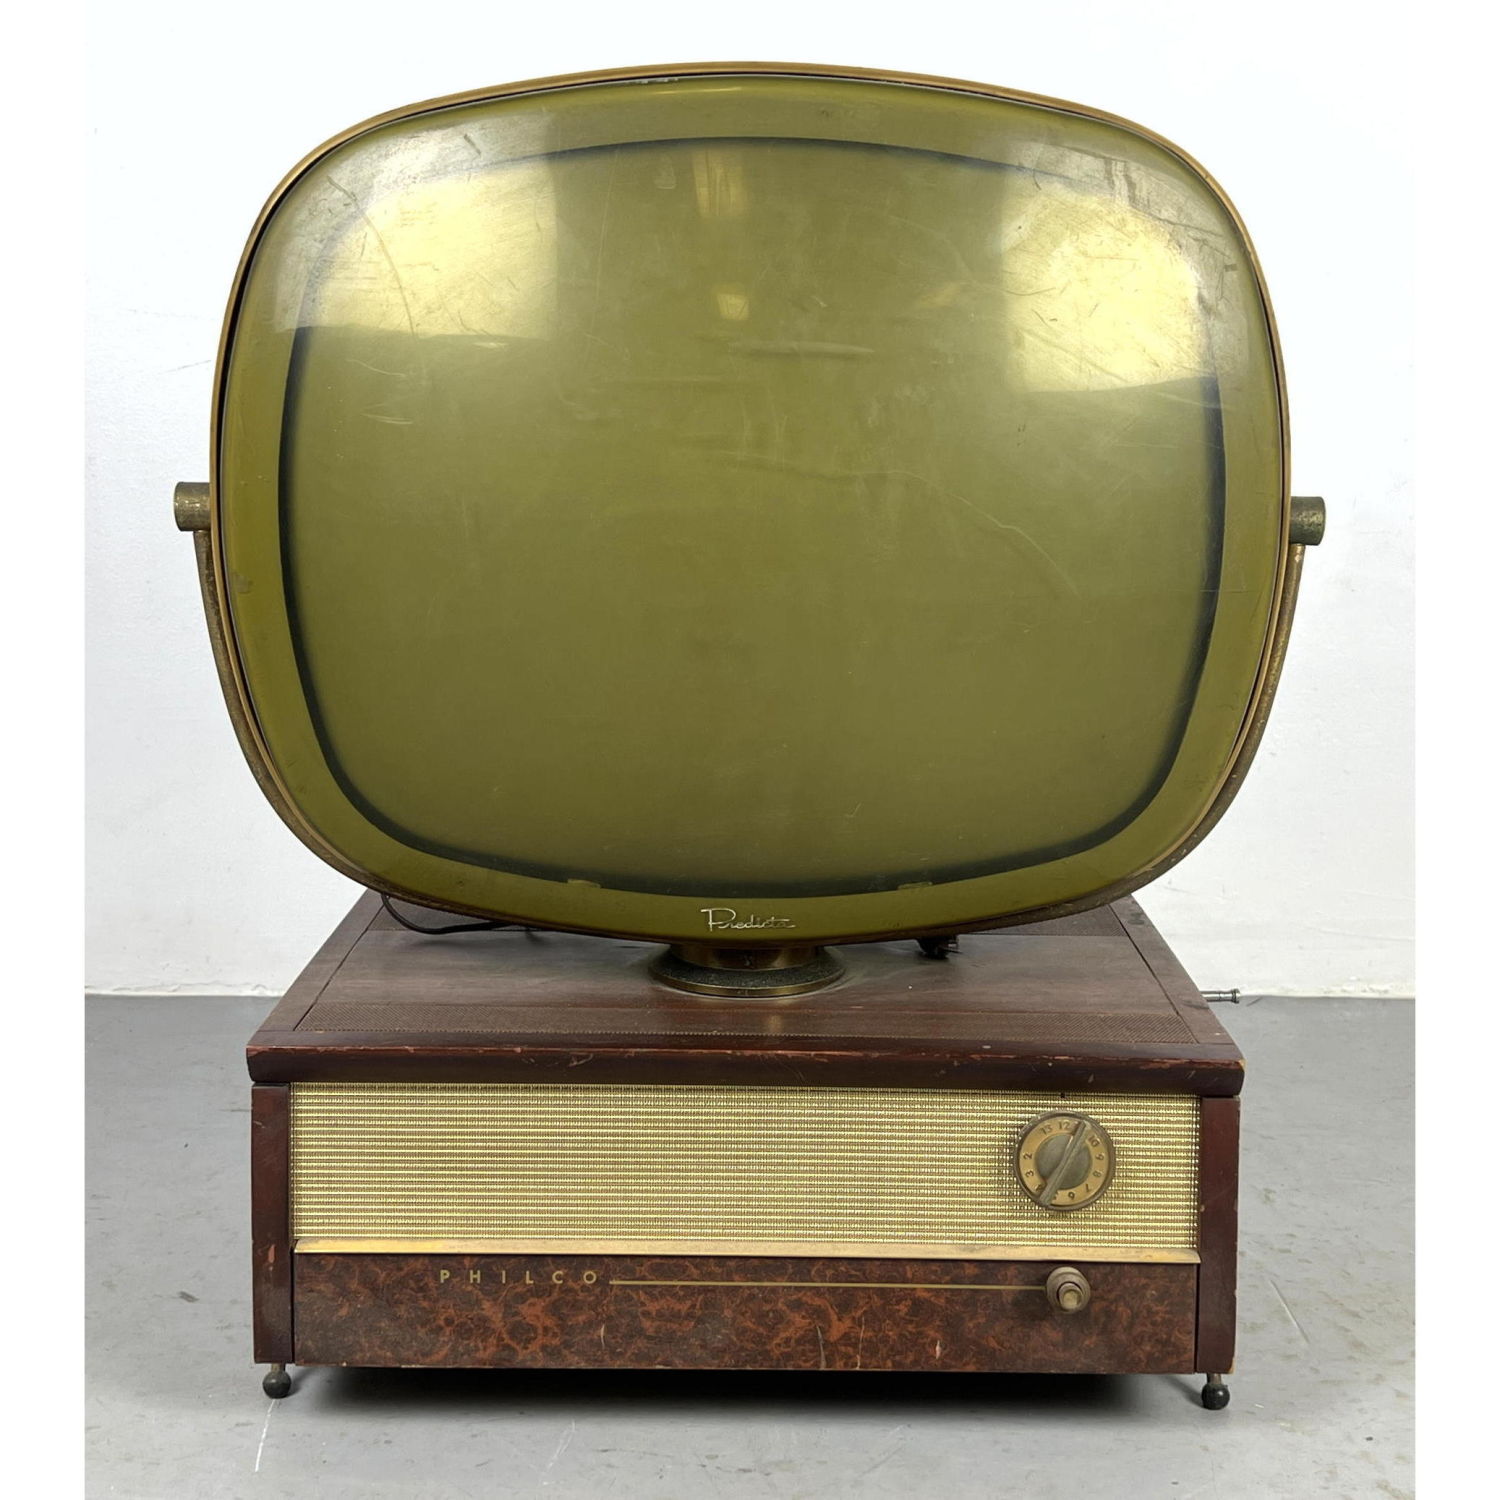 PHILCO "Predicta" Vintage Television.